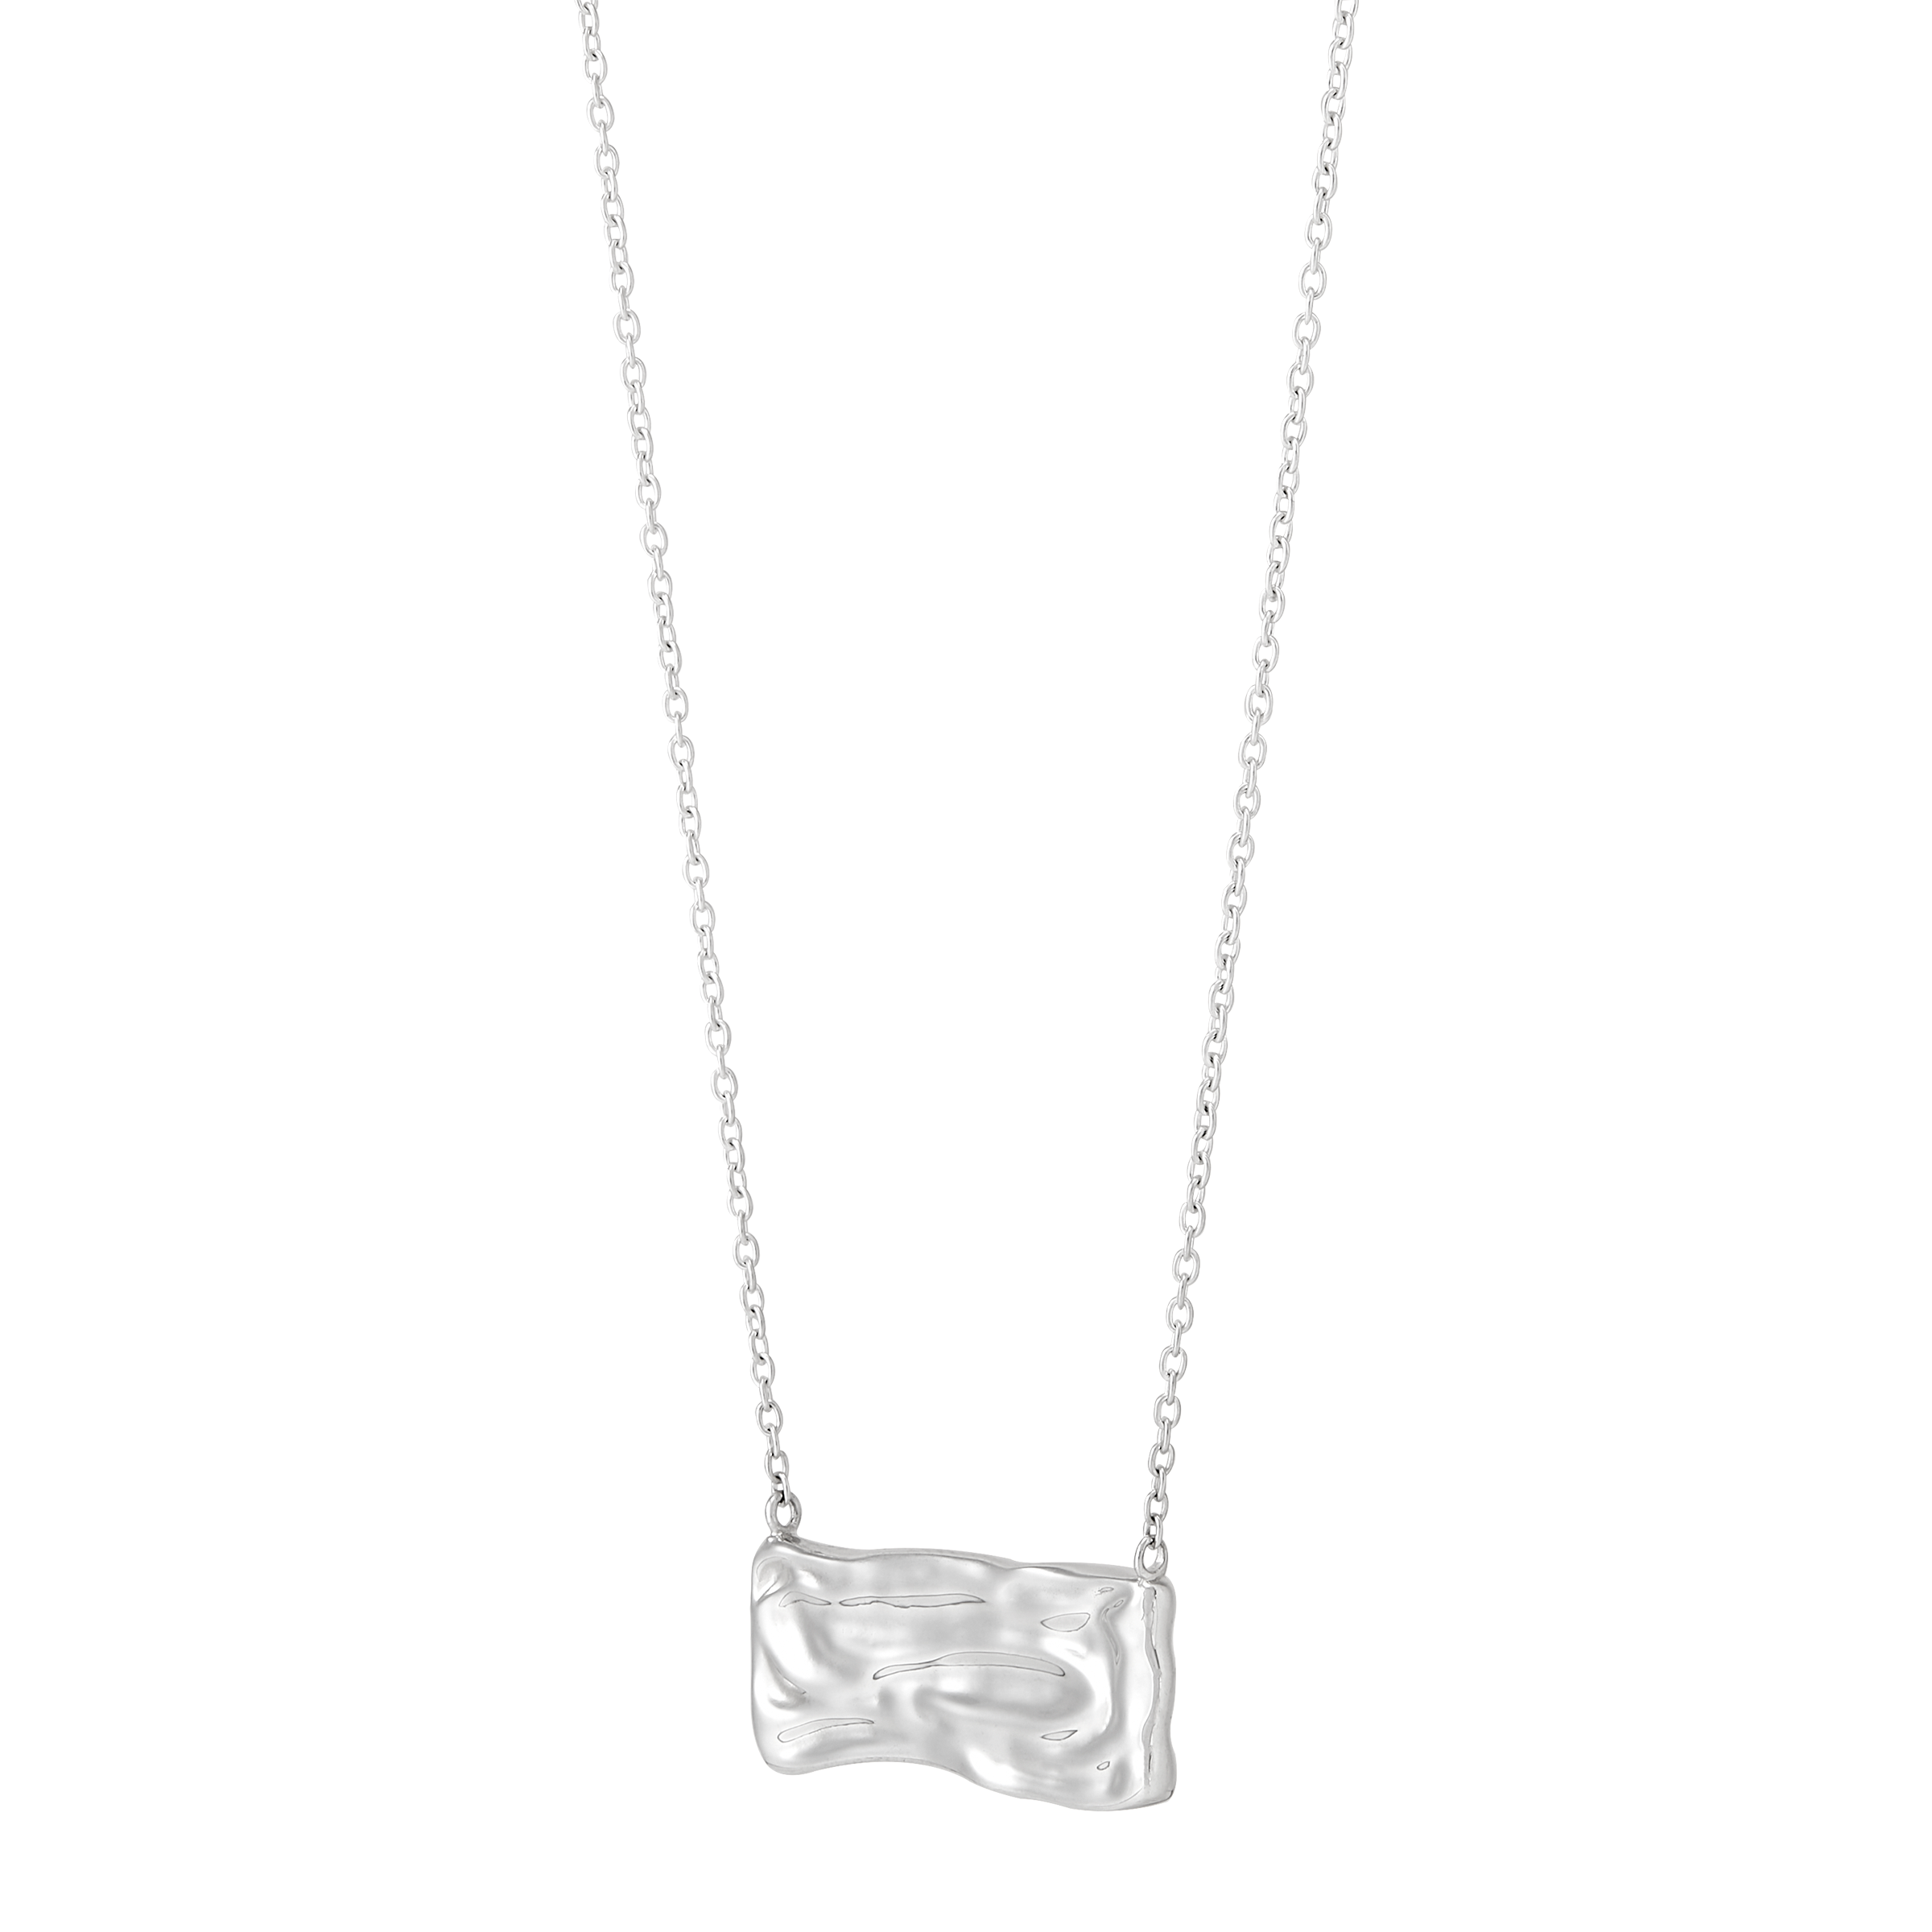 Silpada 'Headlines' Sterling Silver Pendant Necklace, 18